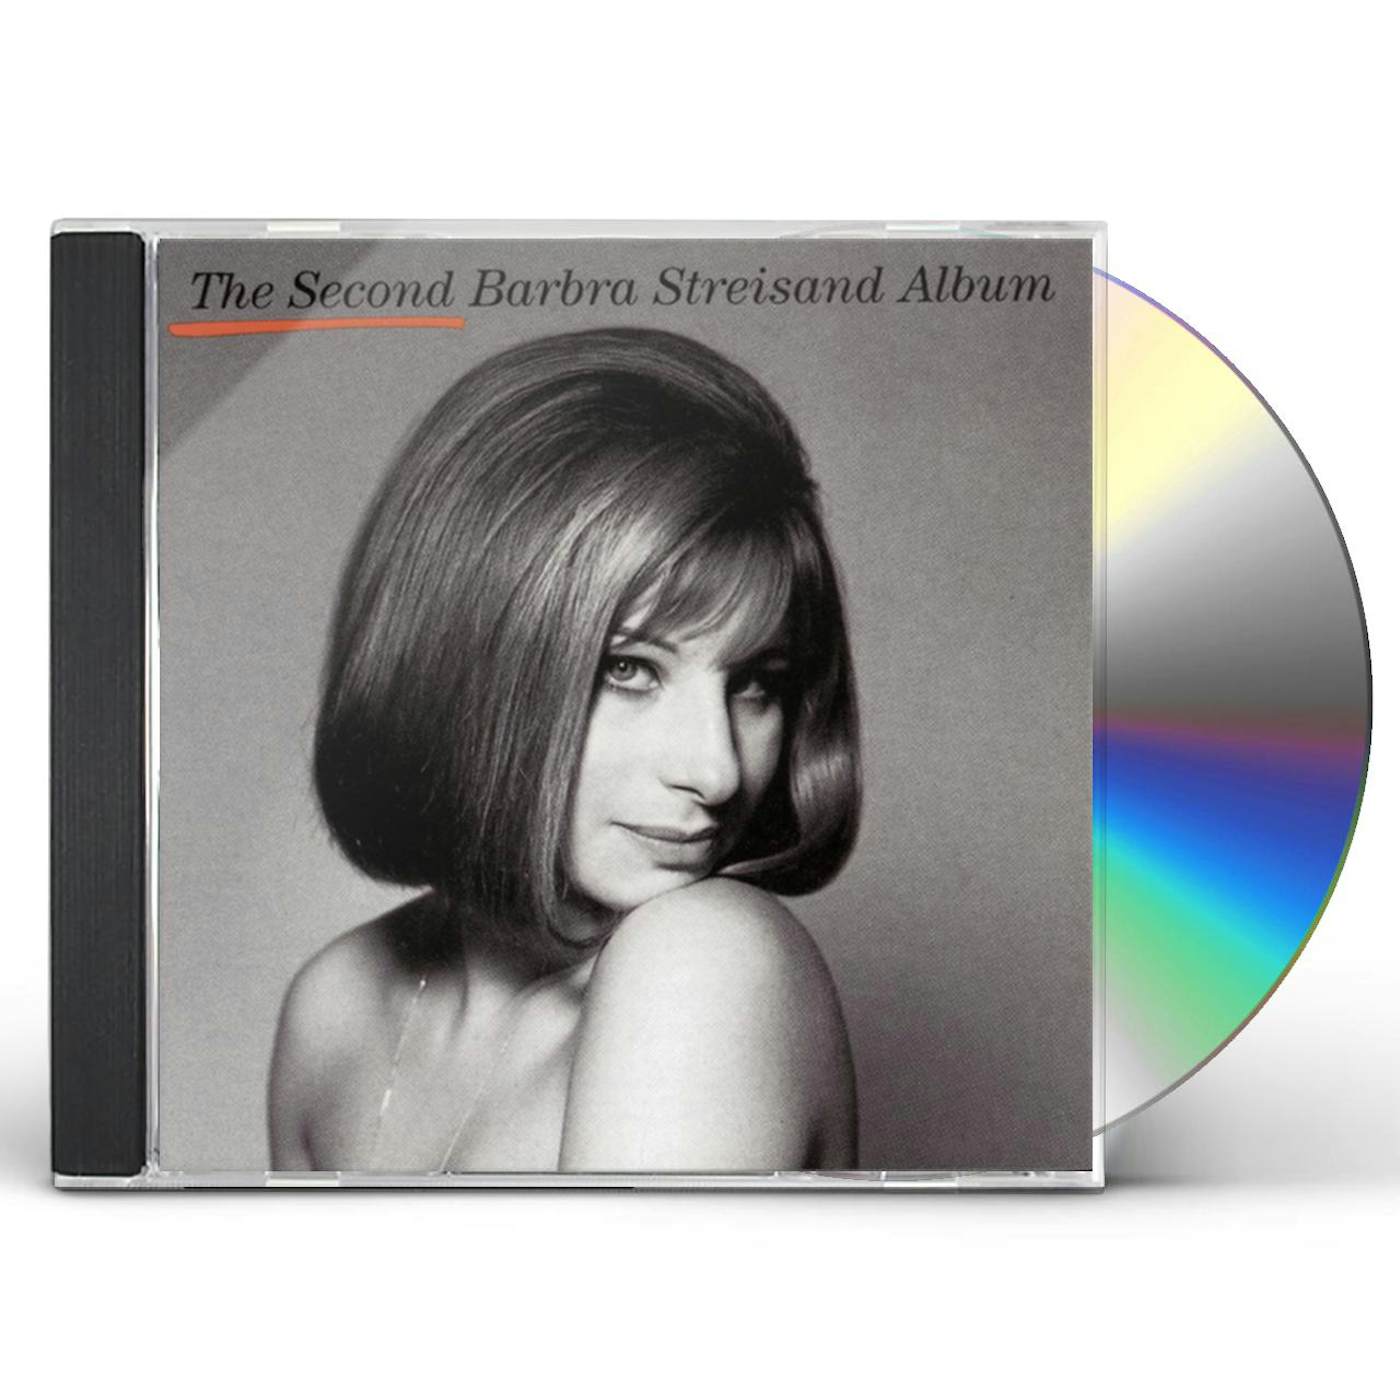 SECOND BARBRA STREISAND ALBUM CD